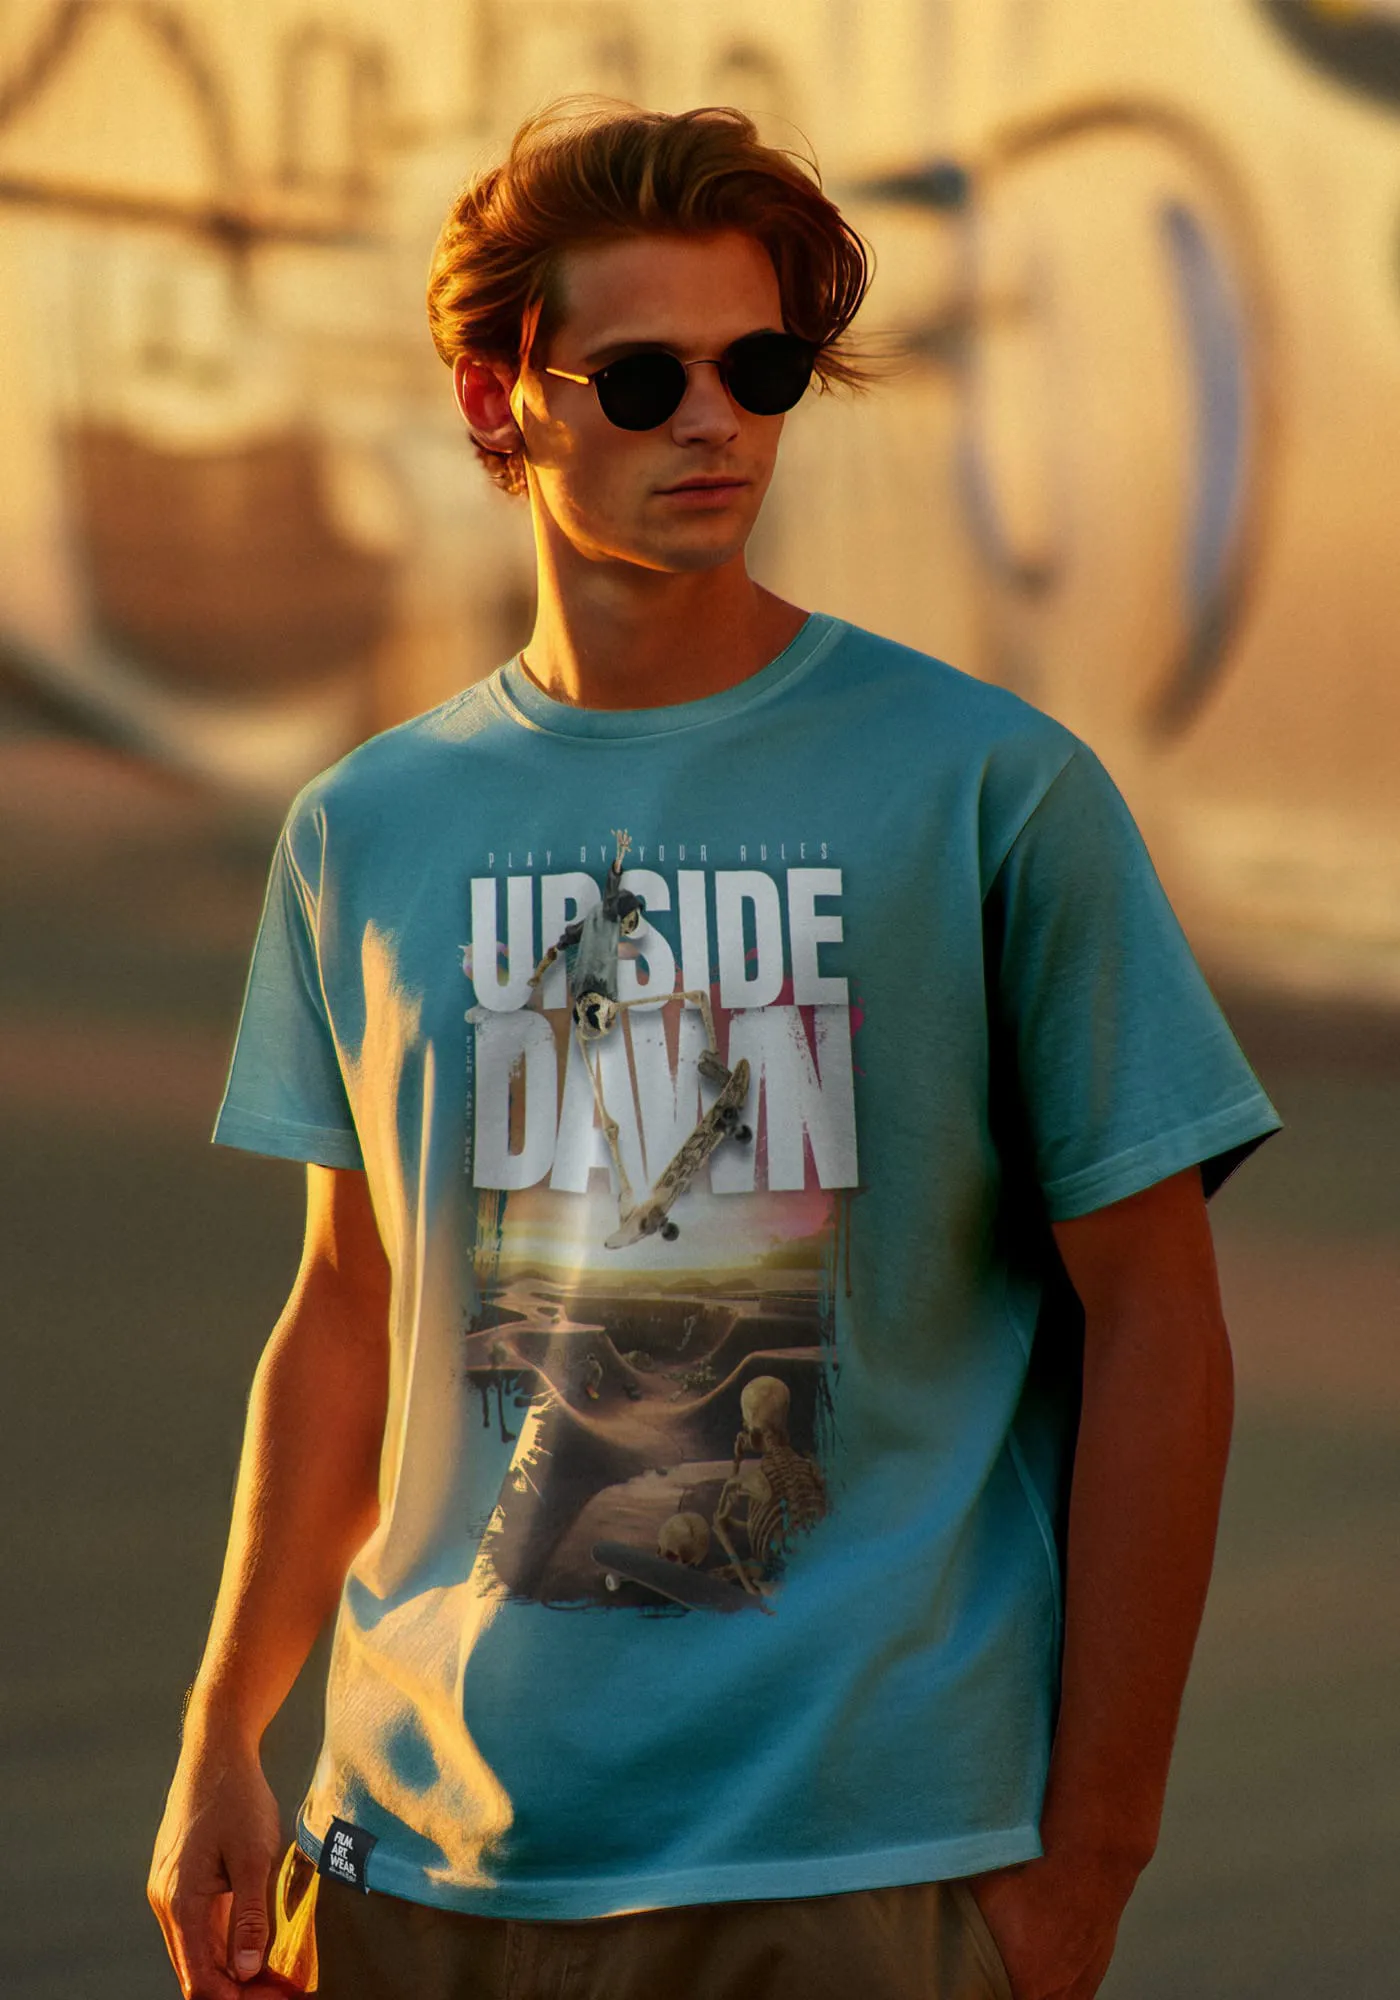 Jordan trägt T-Shirt mit Frontprints Upside Dawn mit den skatenden Skeletten 